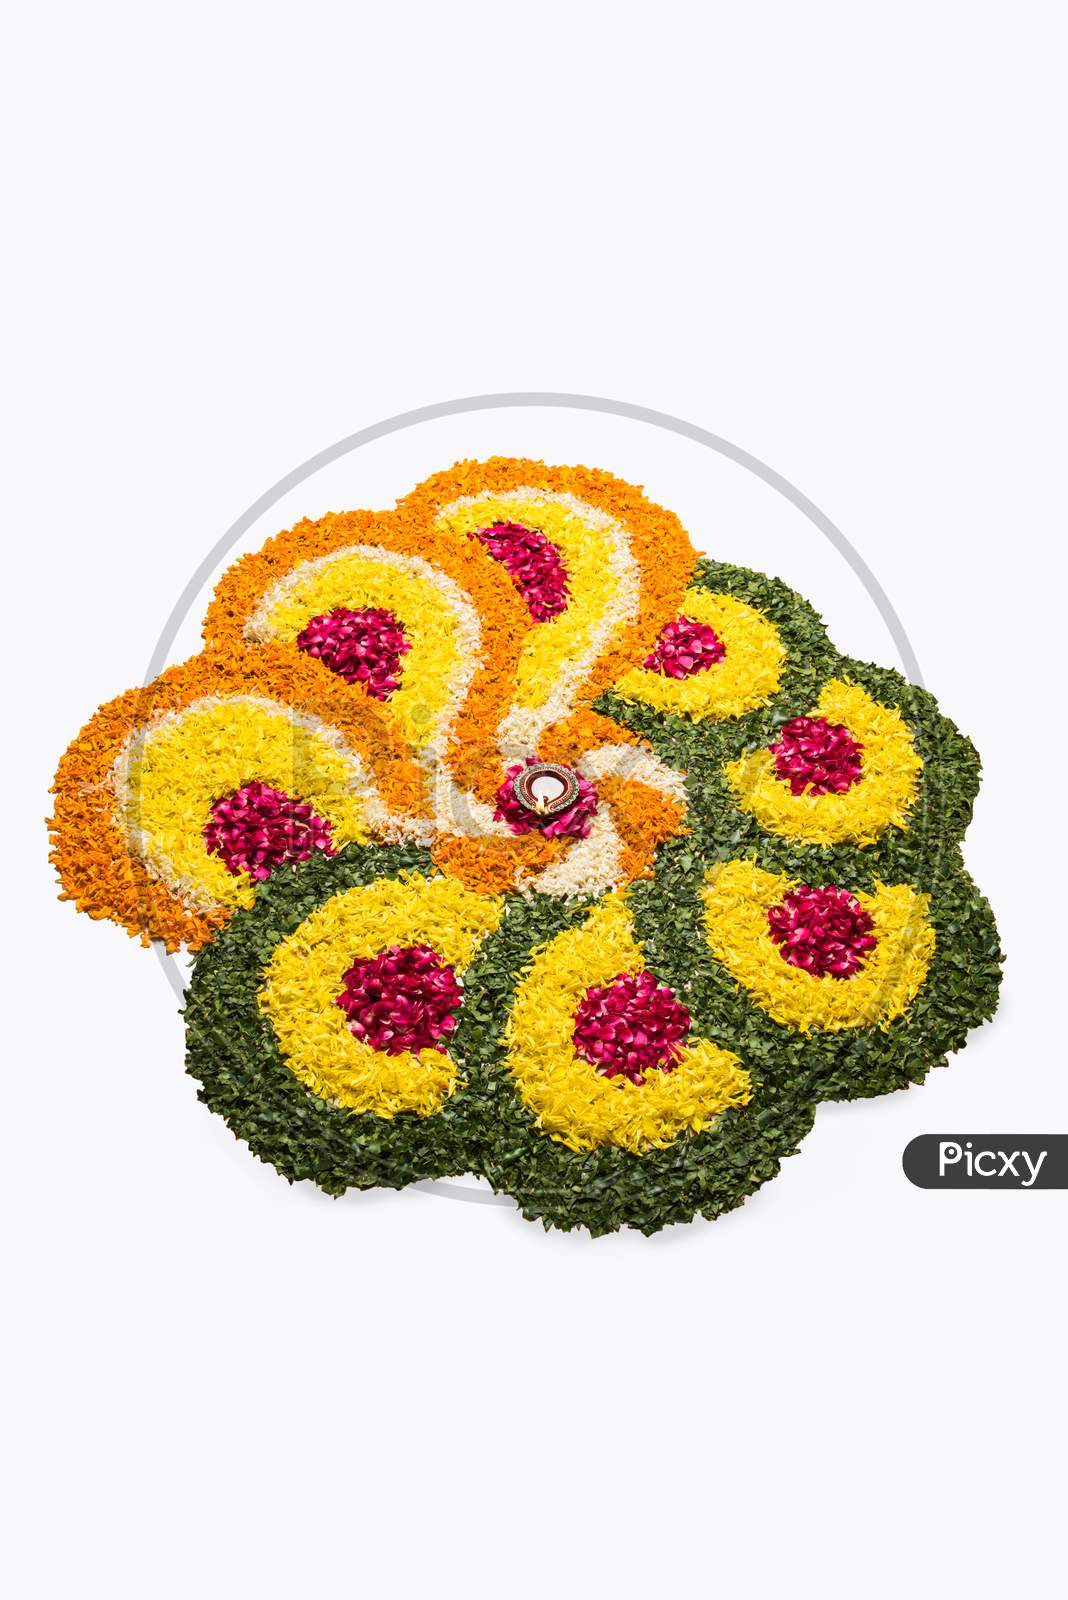 flower rangoli for Diwali or pongal with diya or clay oil lamp